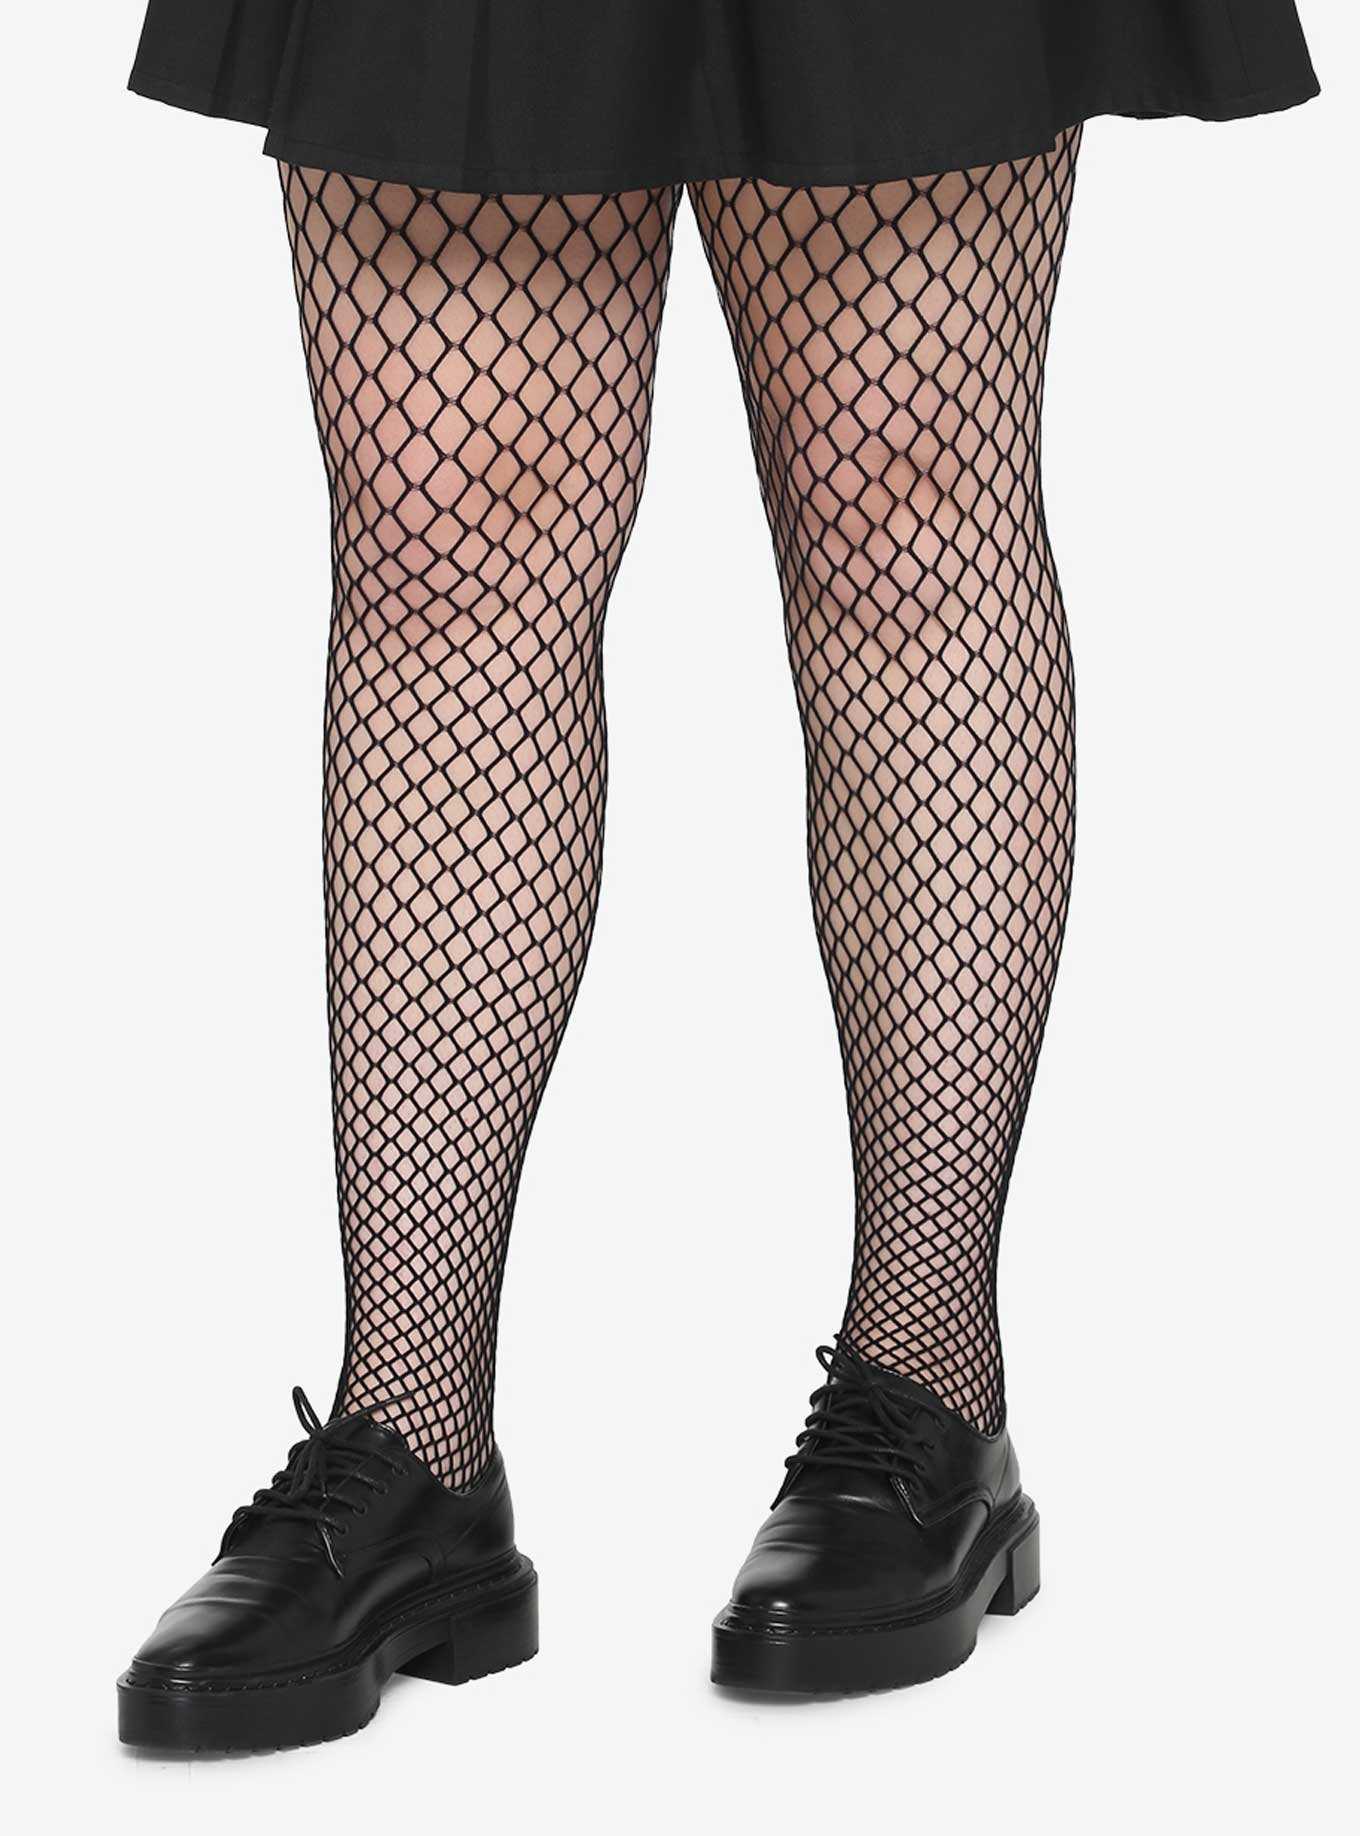 3 Black Fishnet Tights Plus Size Net Pantyhose Women Sexy Cross Mesh  Stockings